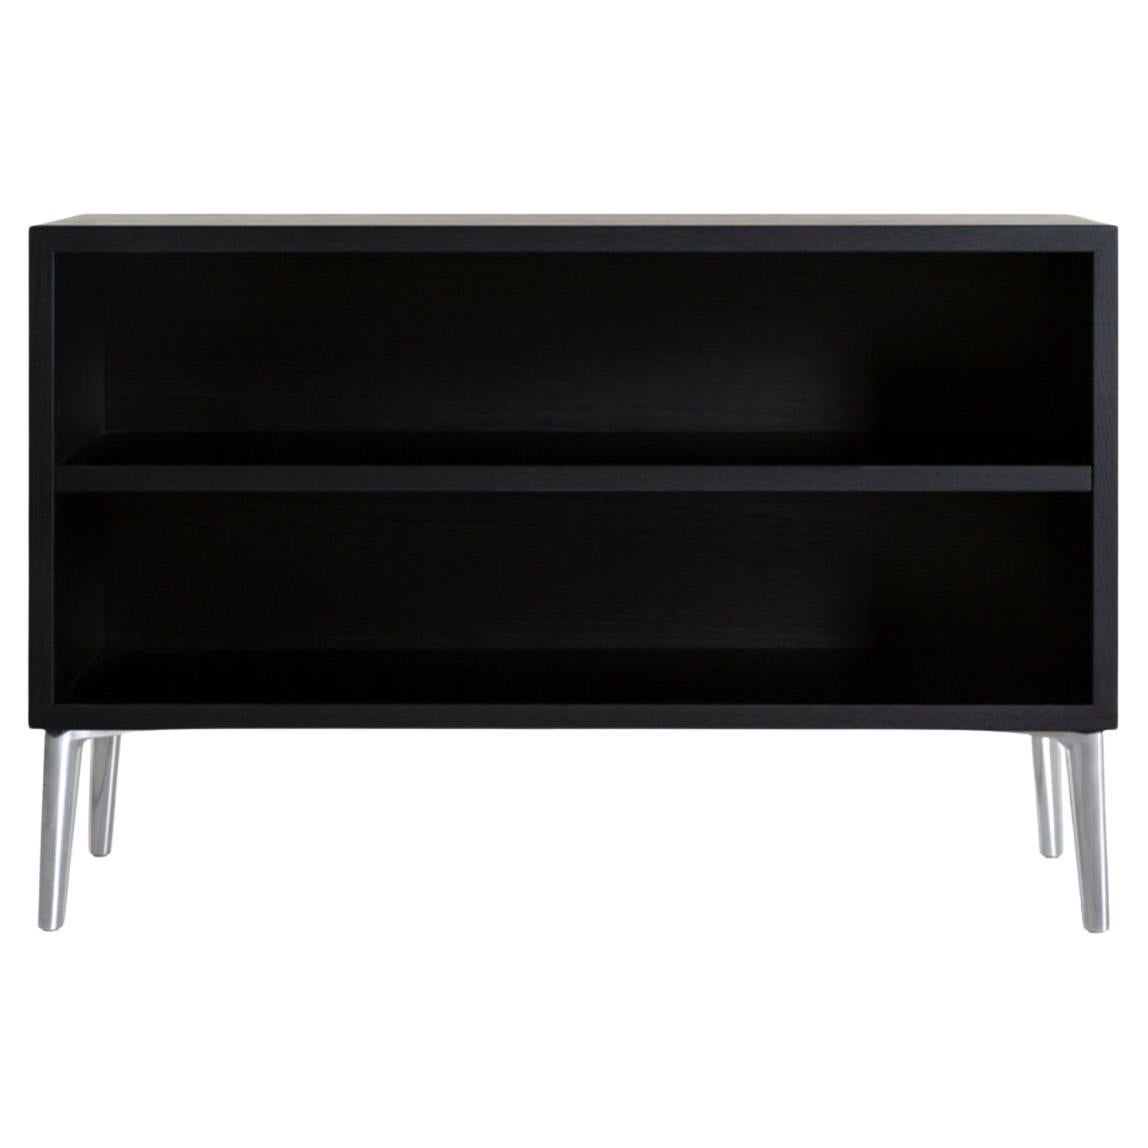 Moooi Sofa So Good Demi Double Shelf Black Stained Oak with Aluminum Feet